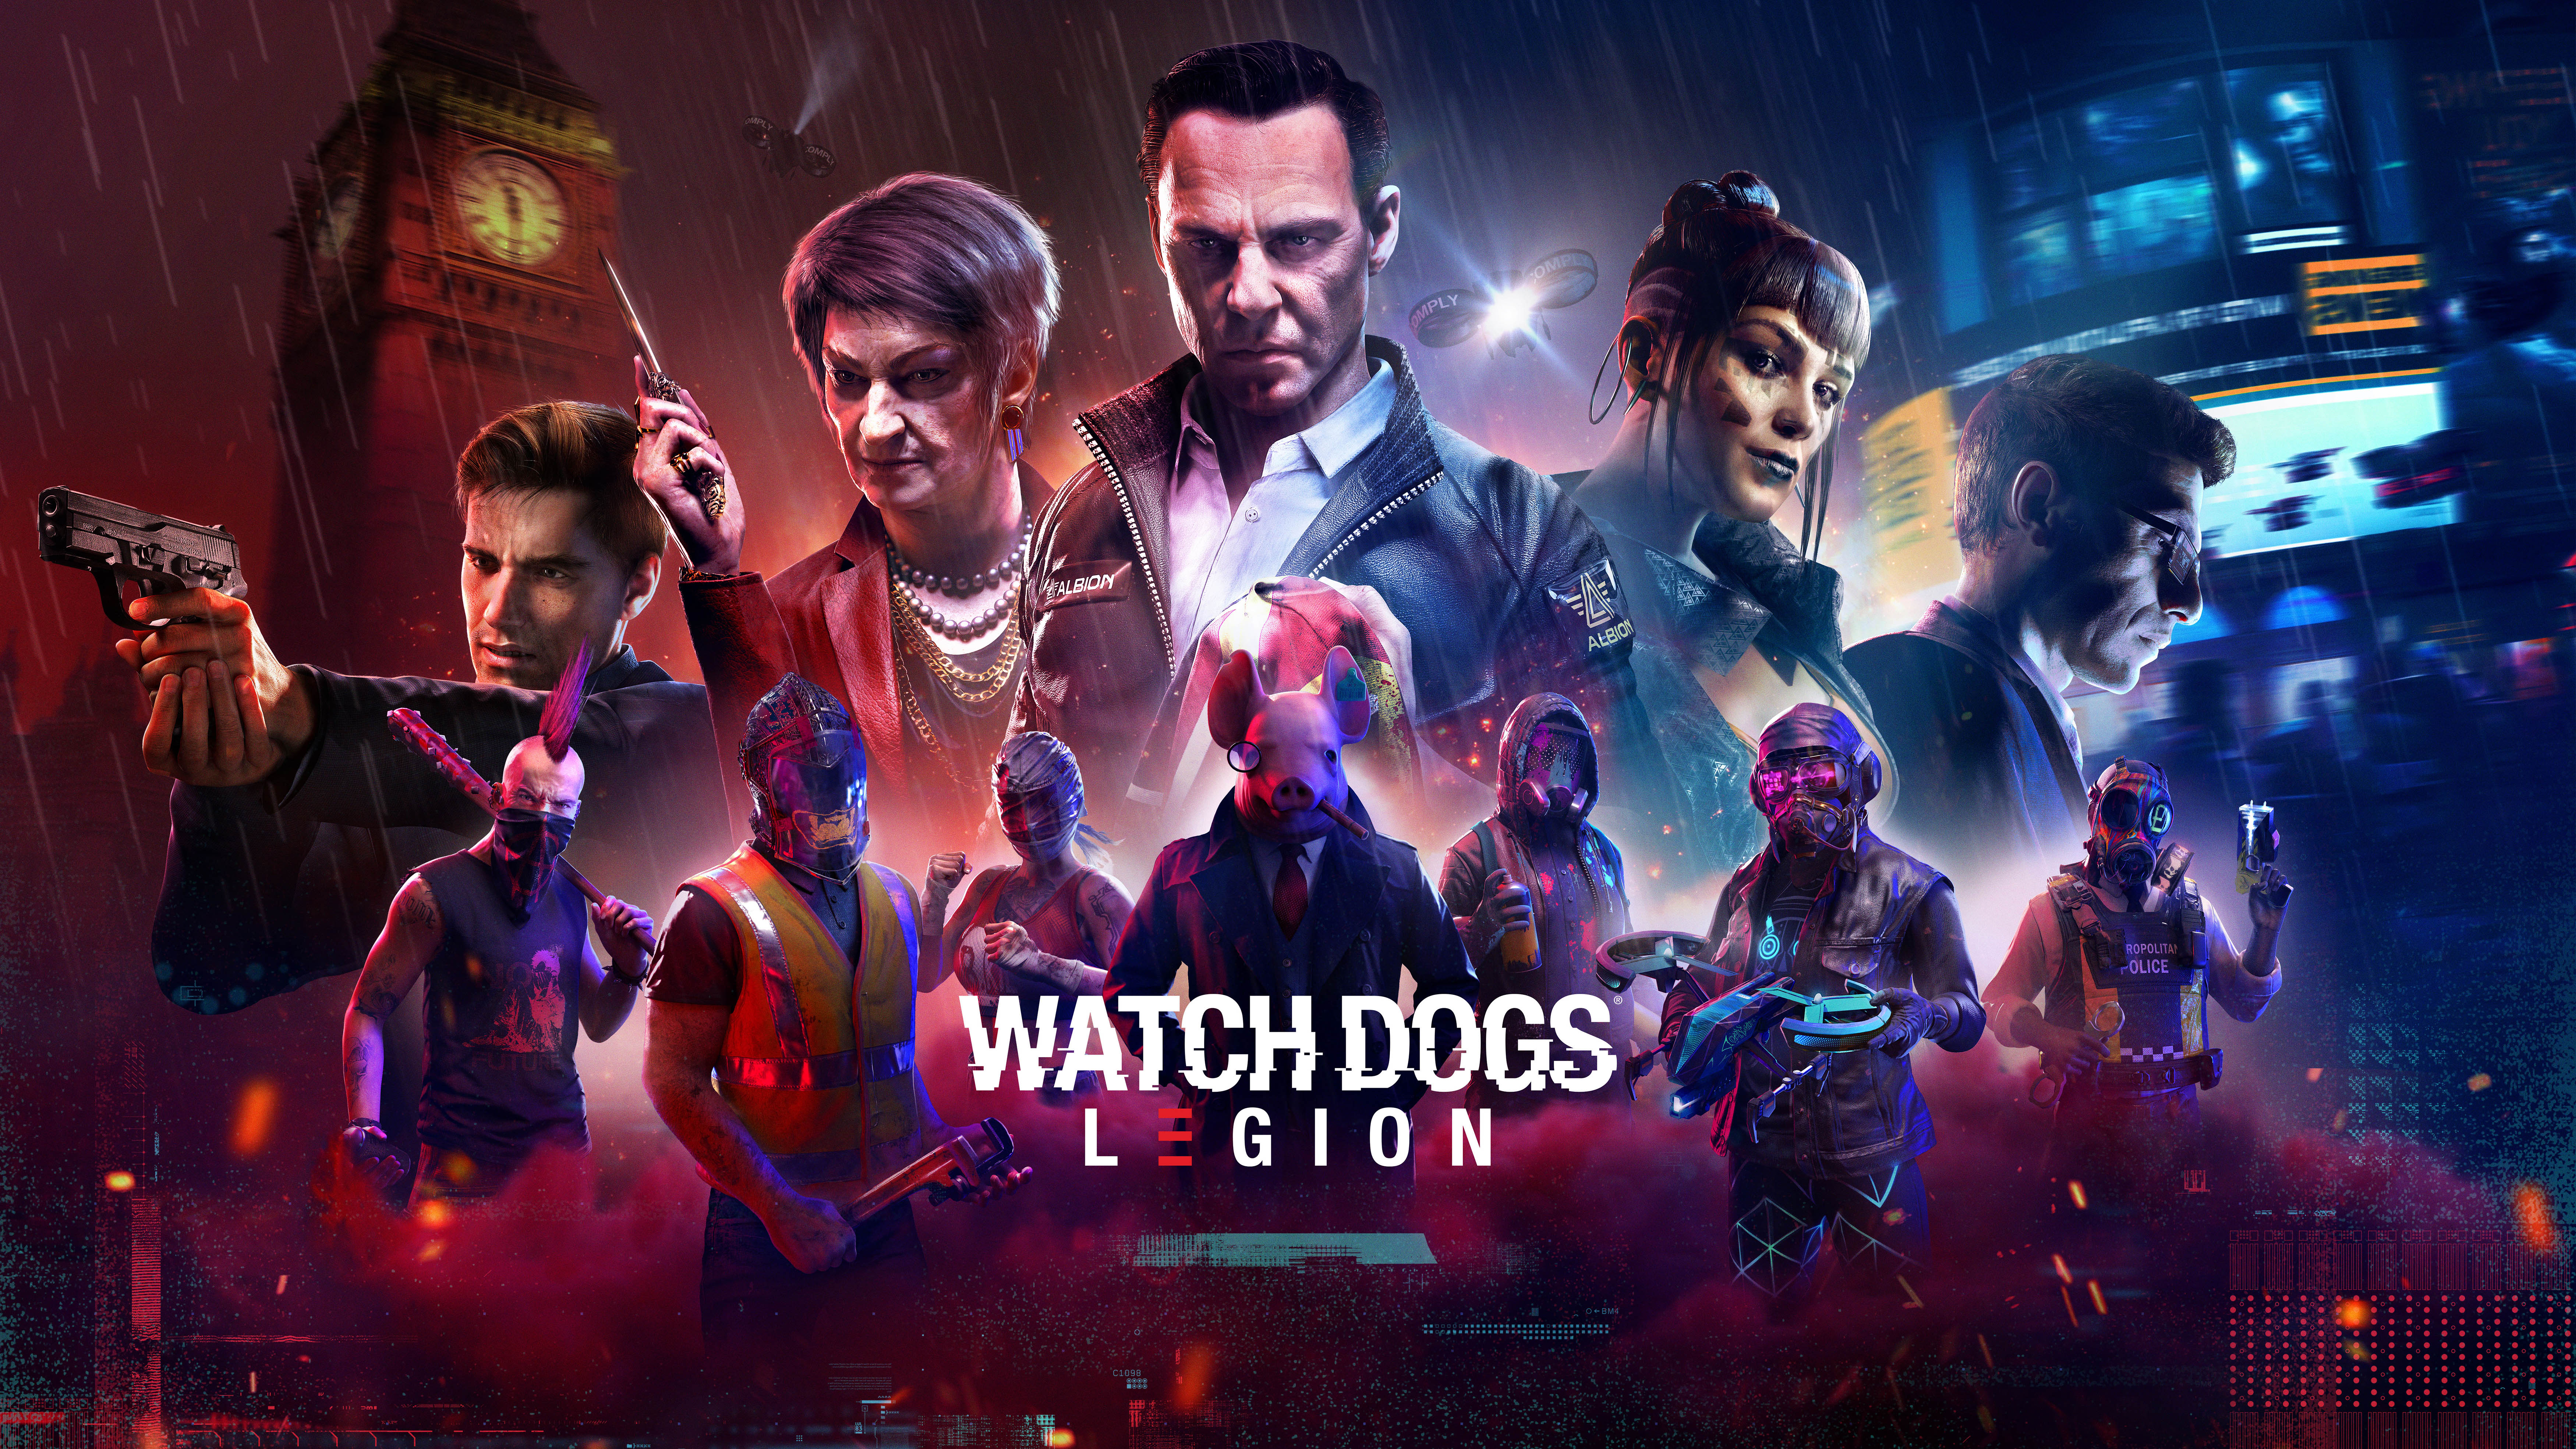 Watch Dogs Legion Wallpapers  Top 35 Best Watch Dogs Legion Backgrounds  Download